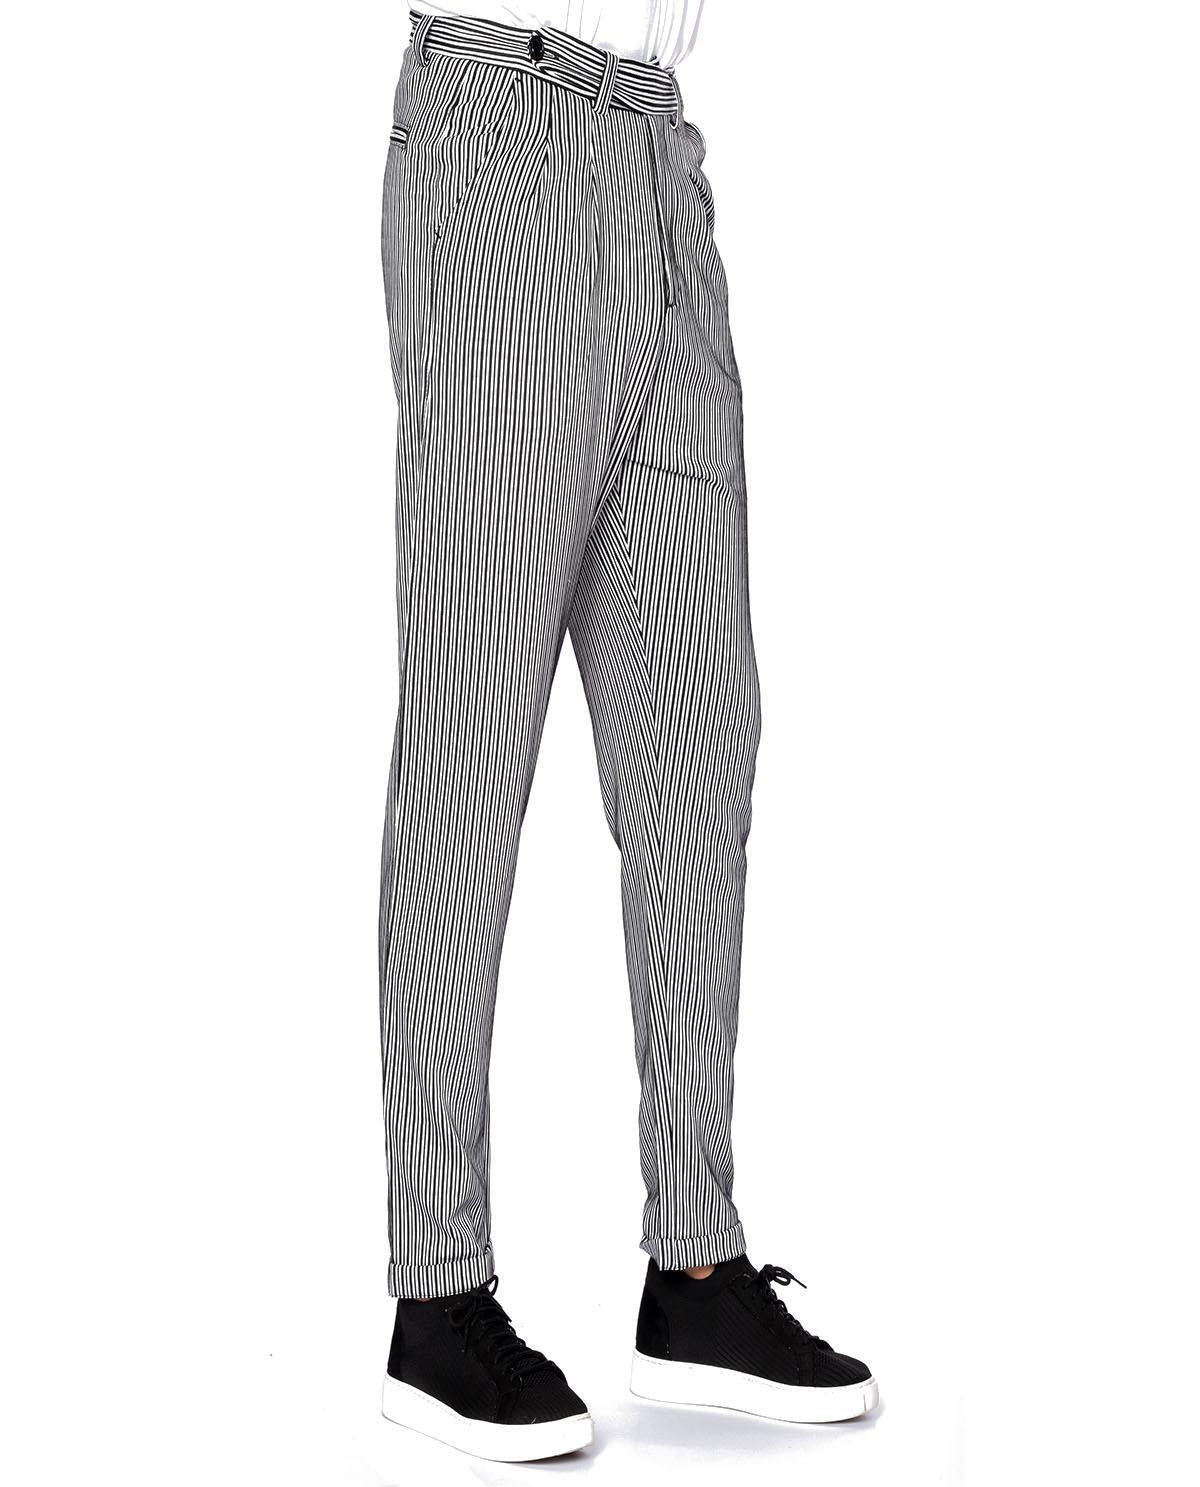 Pantalon noir à rayures blanches en coton